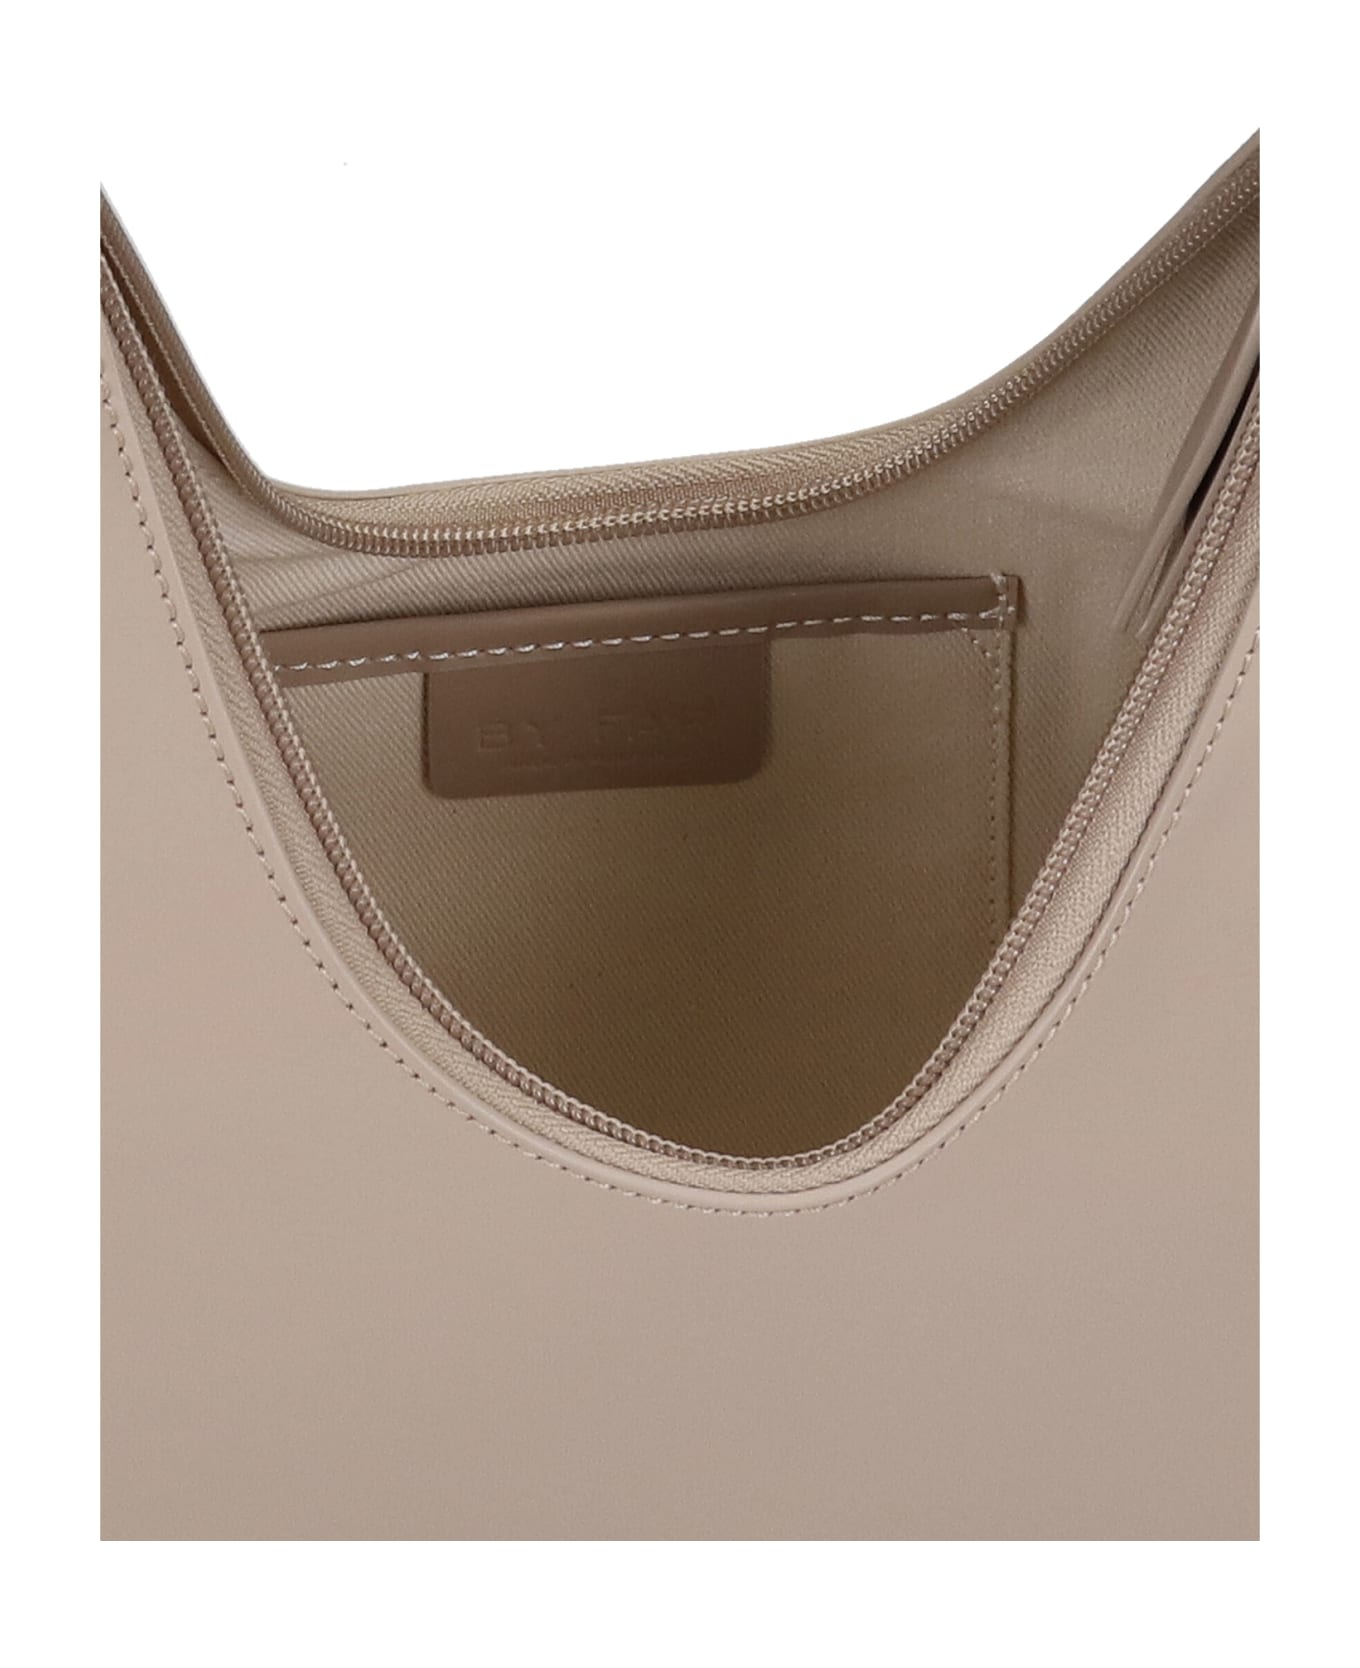 BY FAR Shoulder Bag In Khaki Leather - khaki